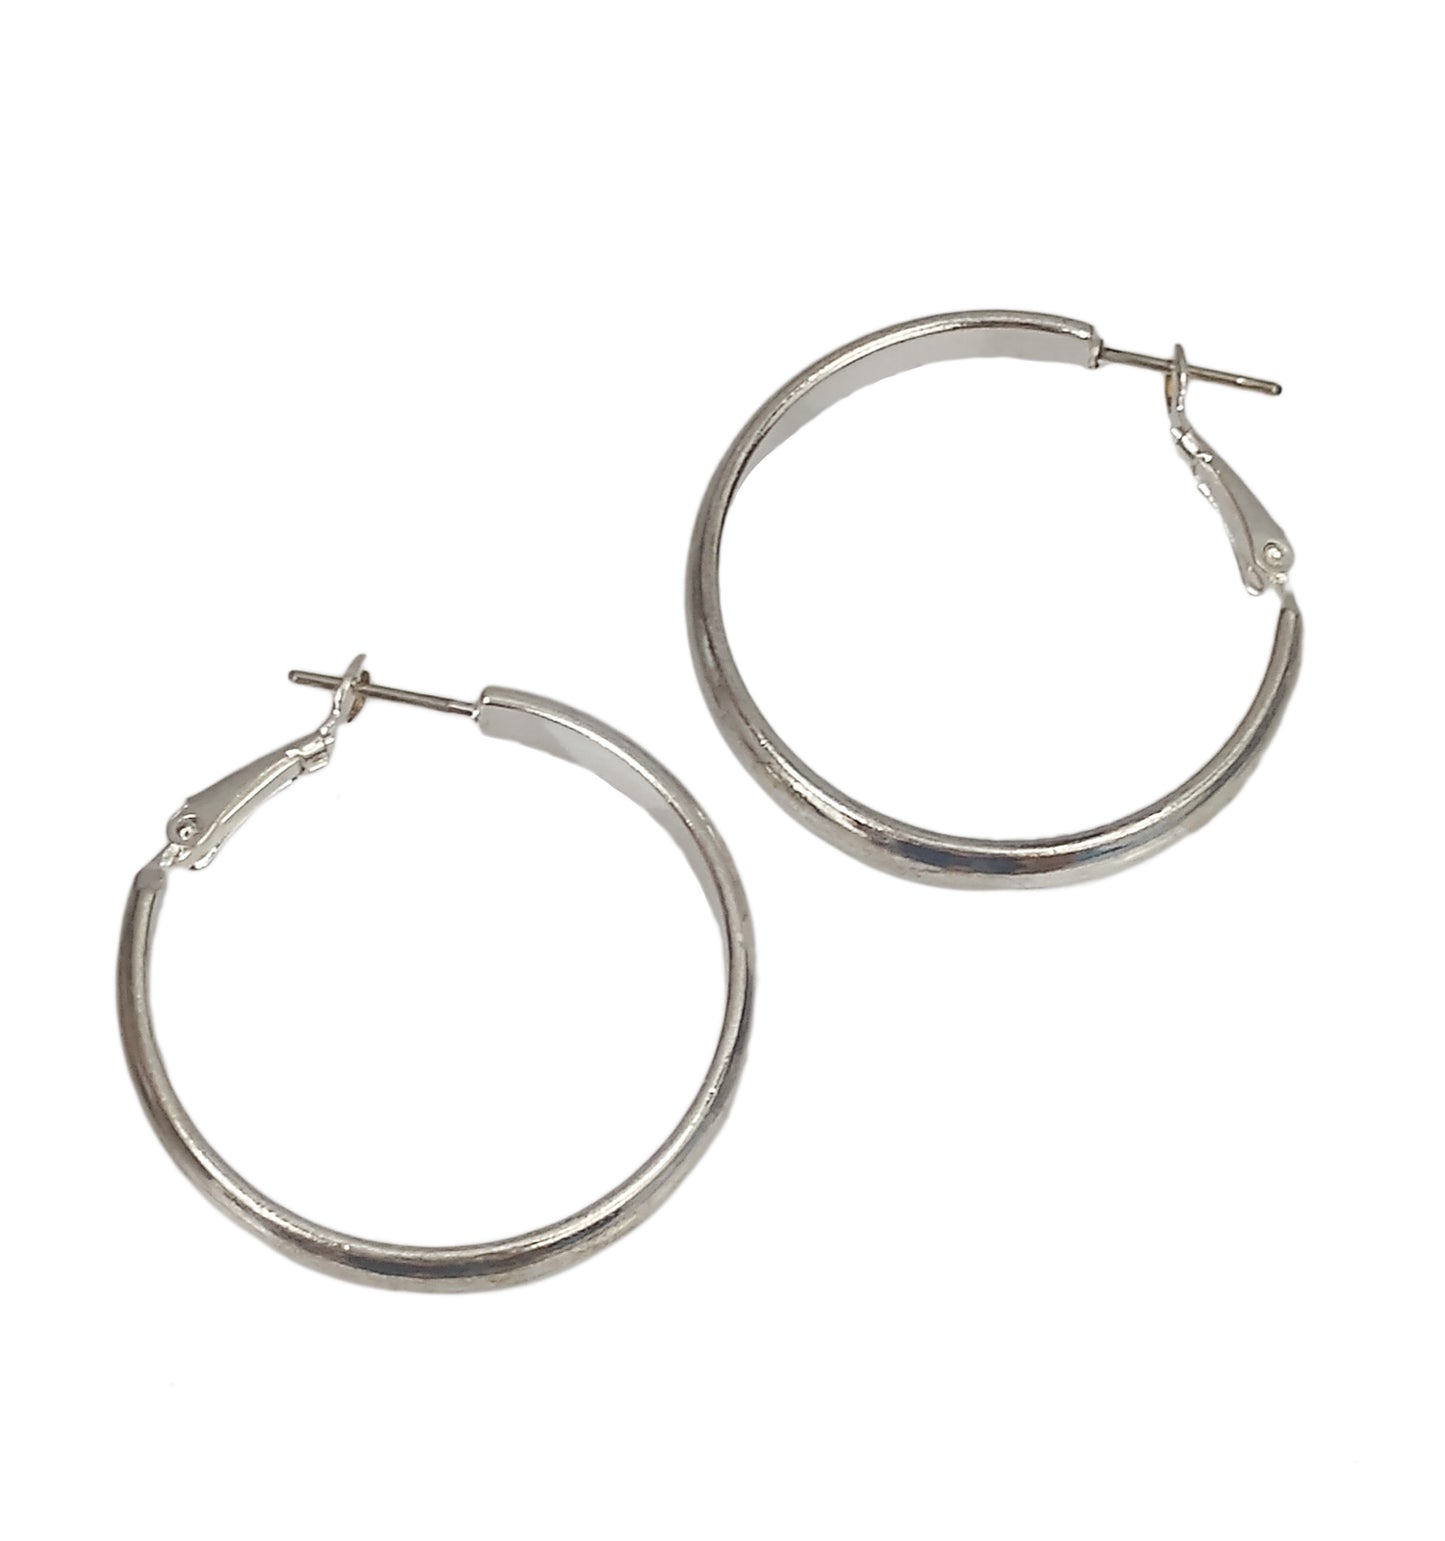 Silver Tone Plain Rounded Metal Pierced Earrings 1 3/8" Hoops